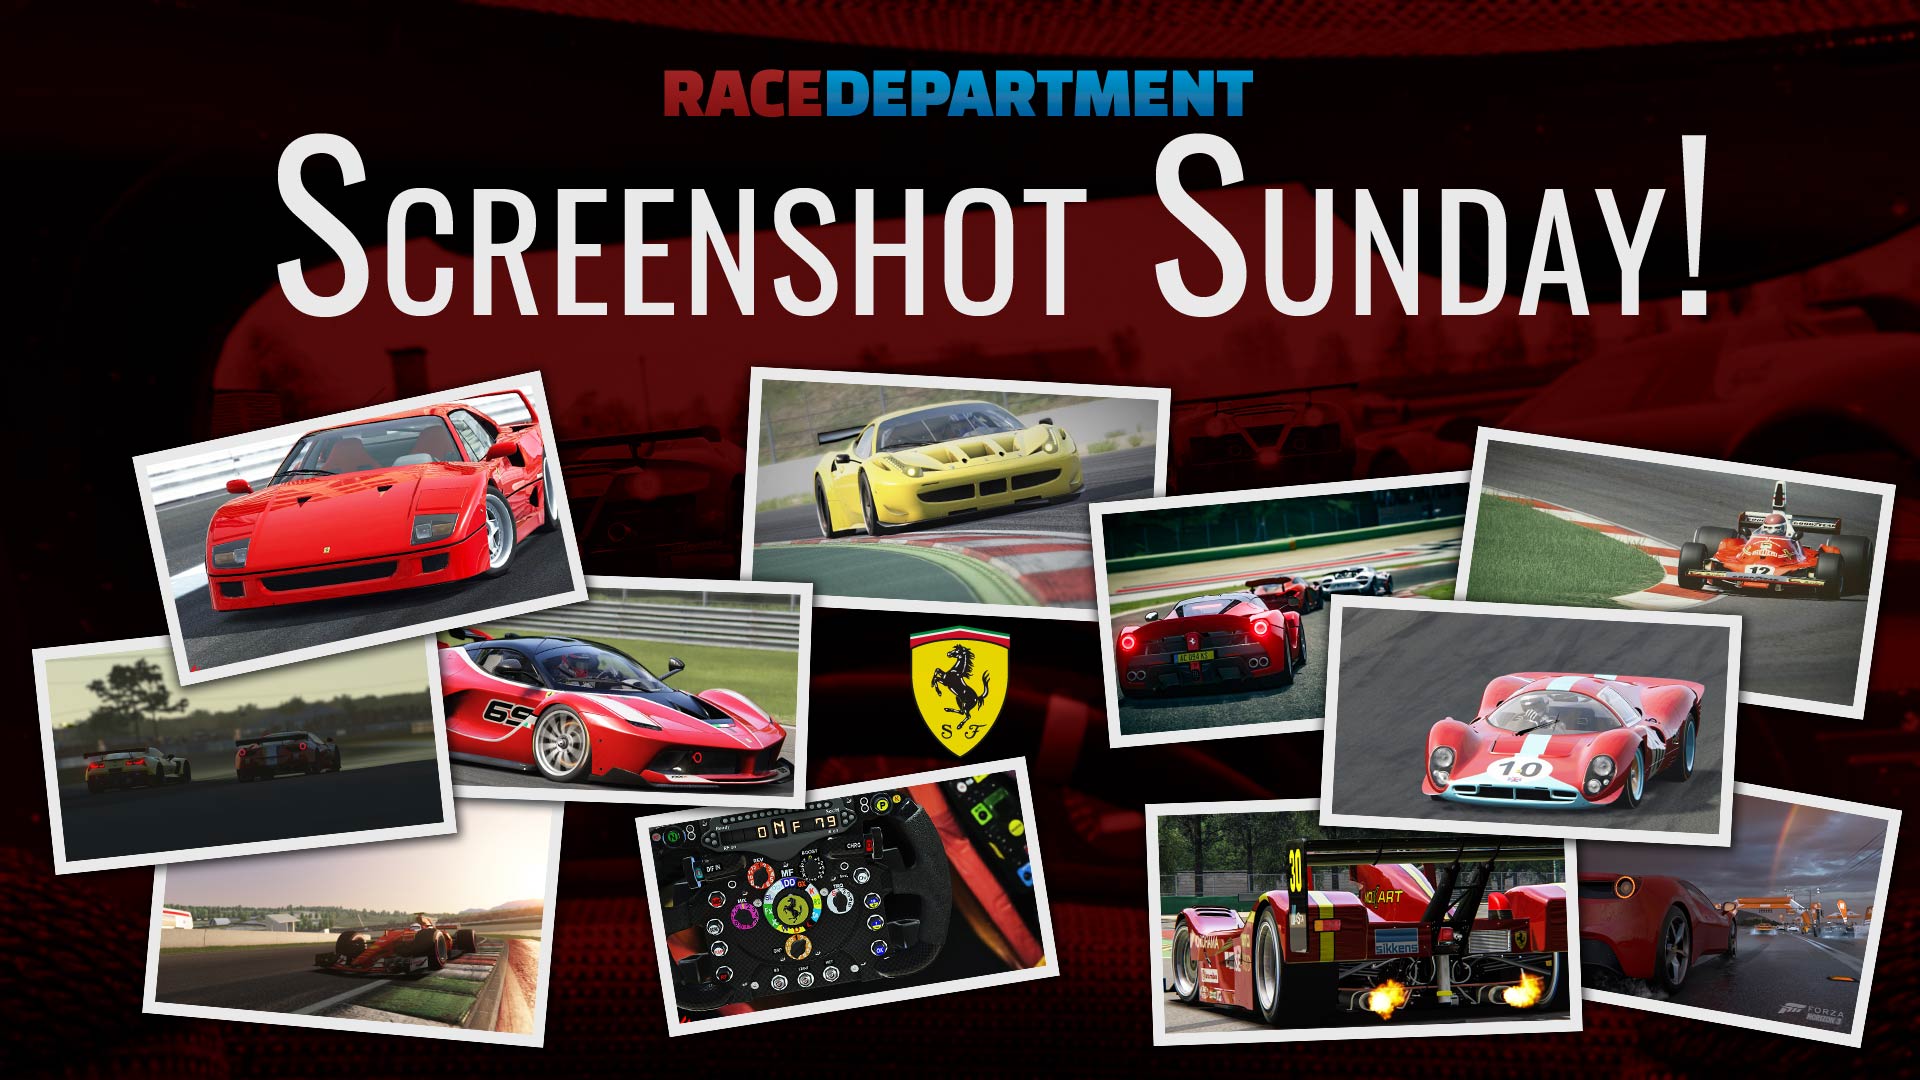 Screenshot Sunday - Ferrari.jpg